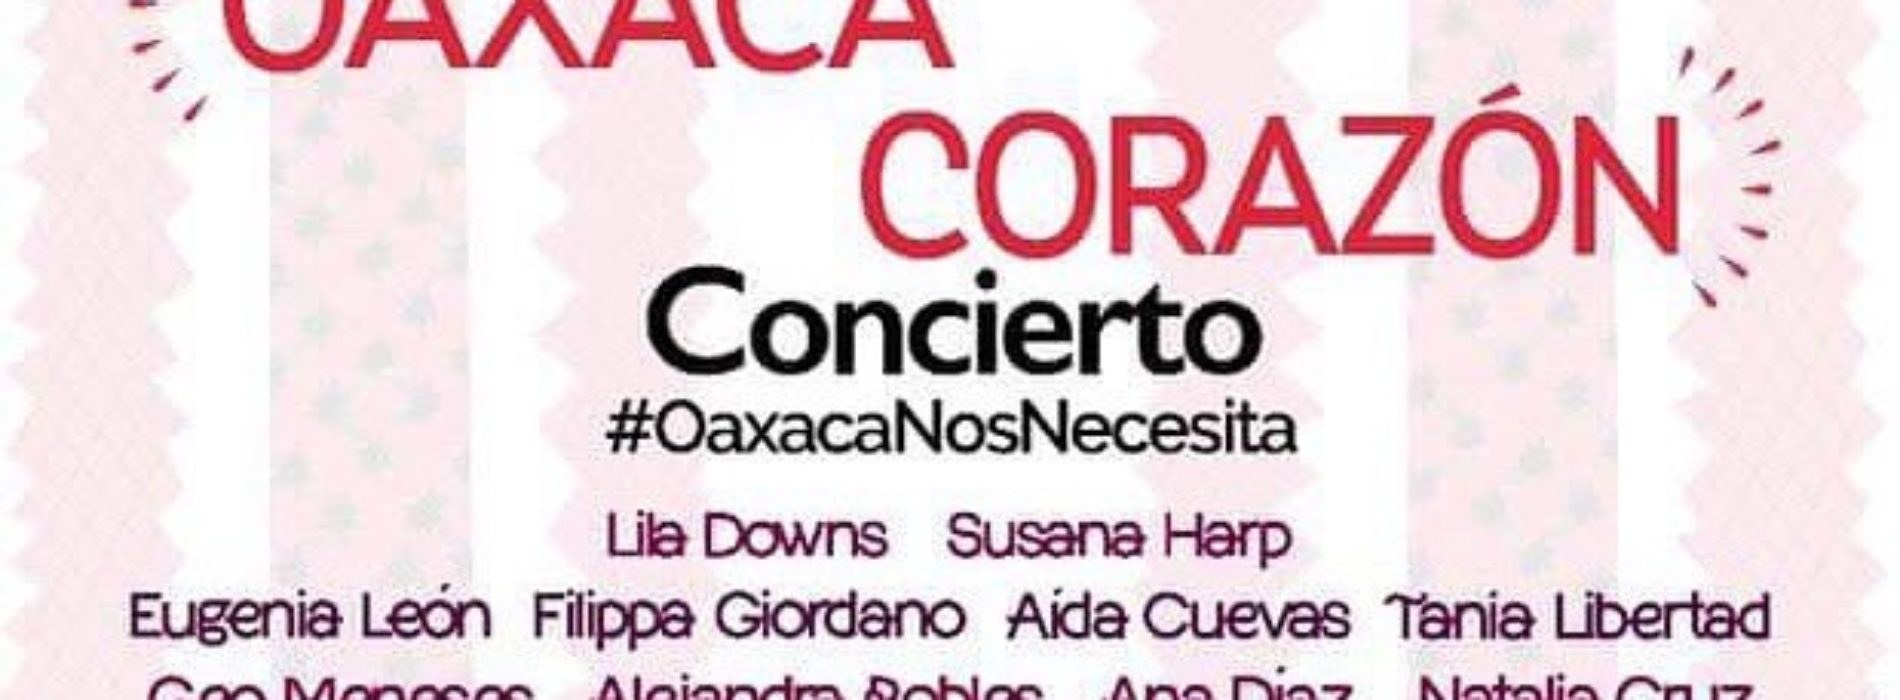 Mañana concierto Oaxaca corazón a beneficio de damnificados del sismo